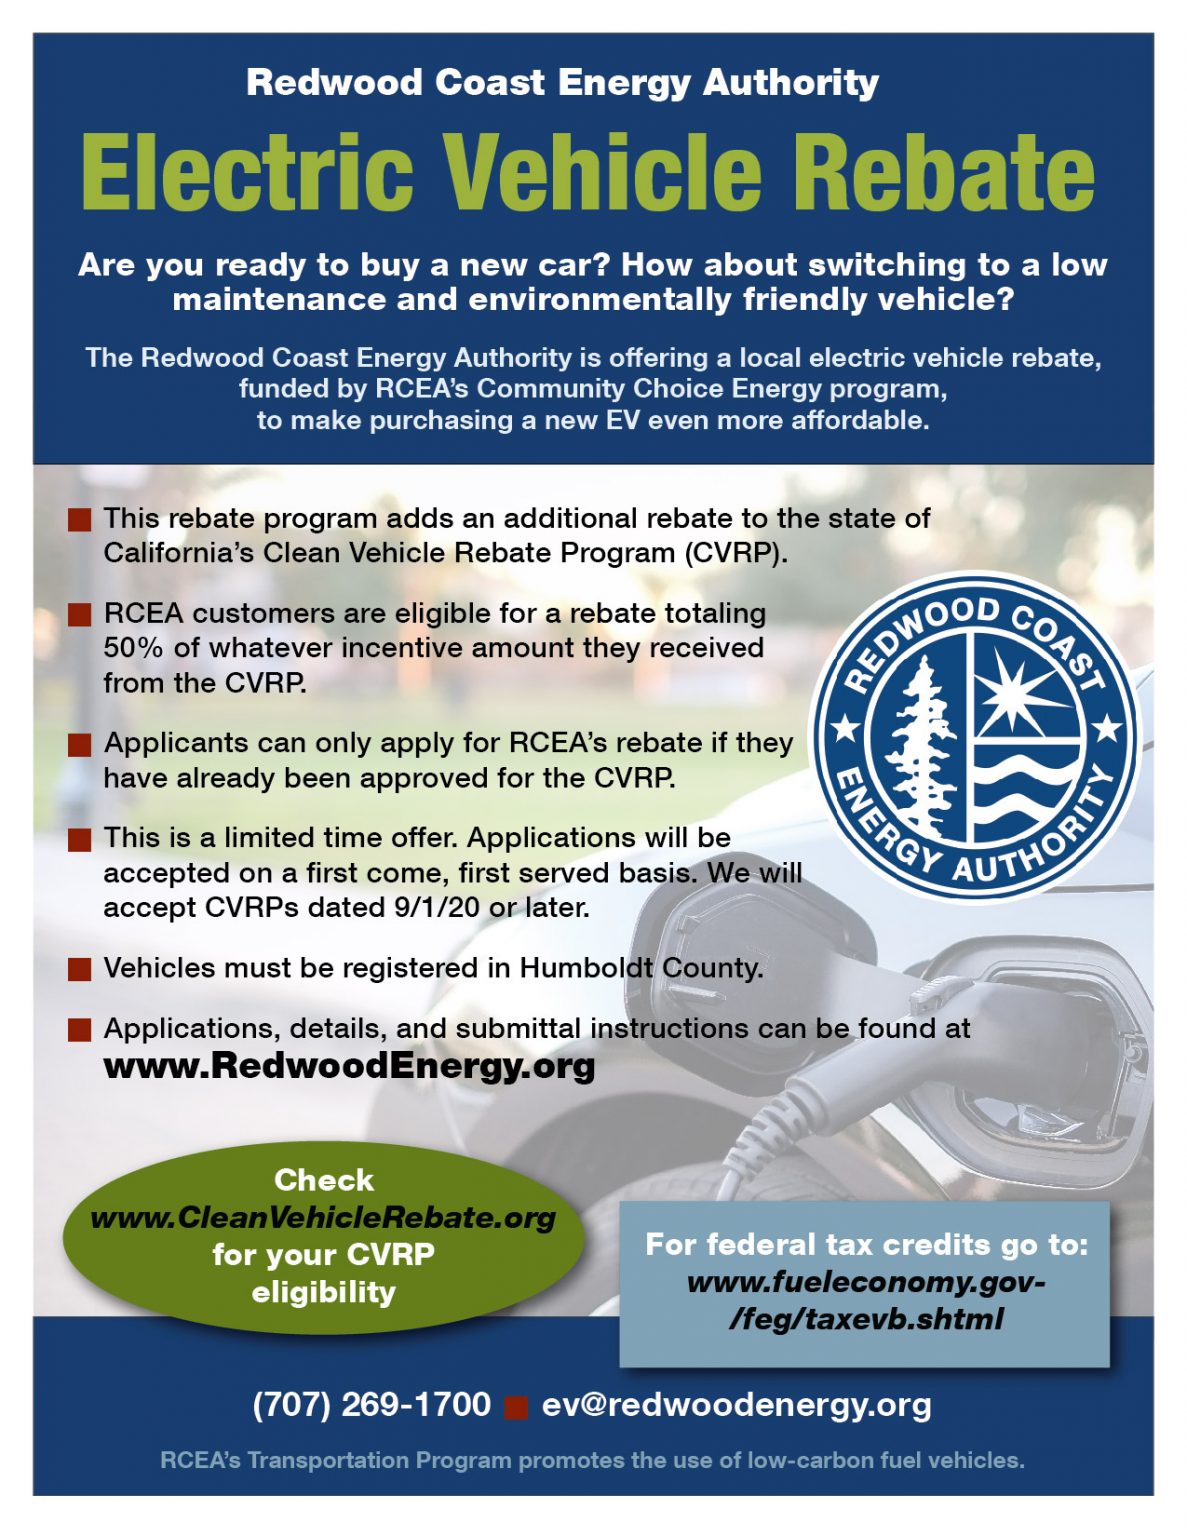 Electric Vehicle Rebate Redwood Coast Energy Authority